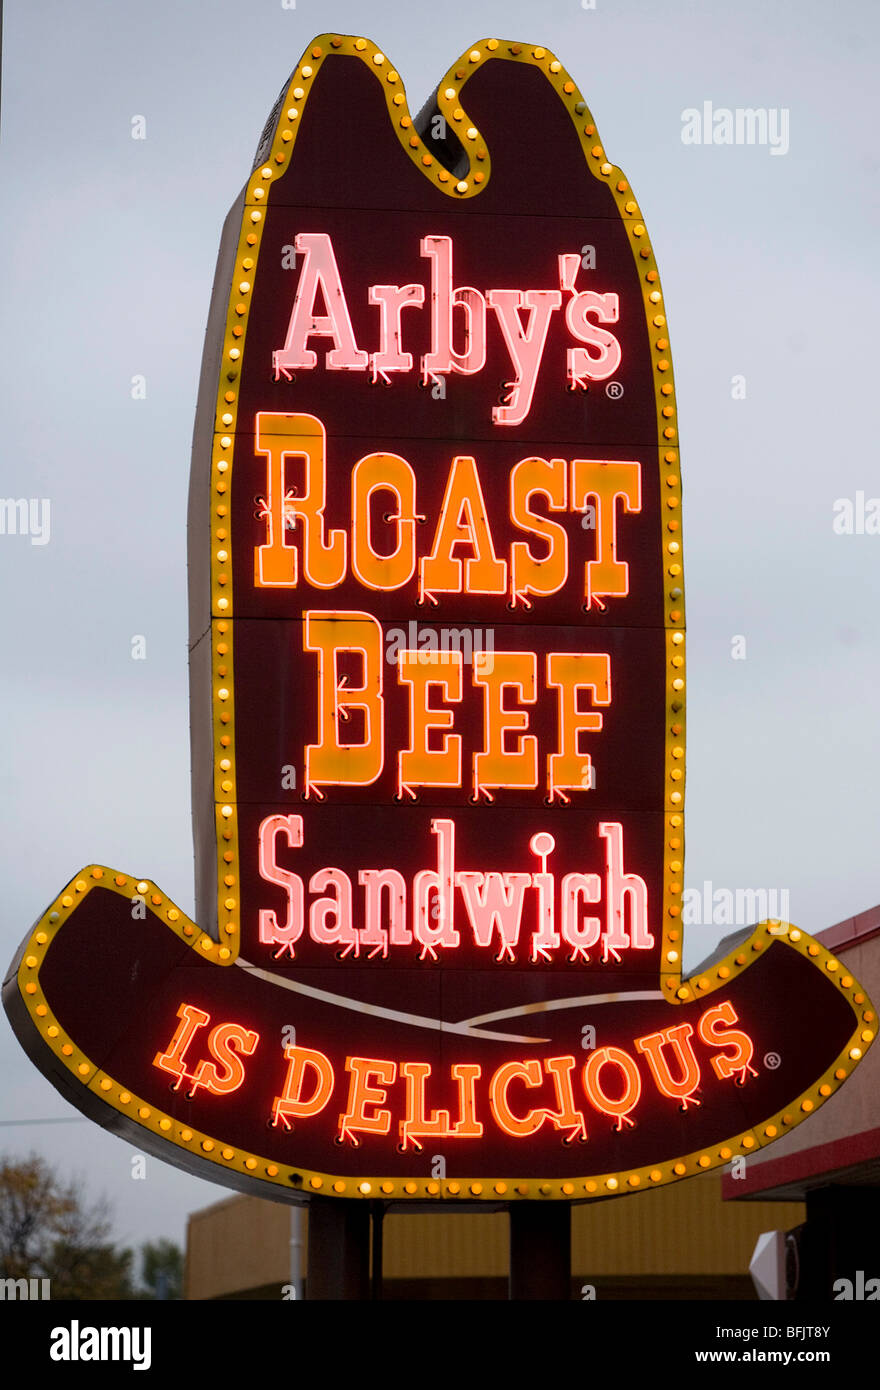 Ein Arby Fastfood-Restaurant. Stockfoto